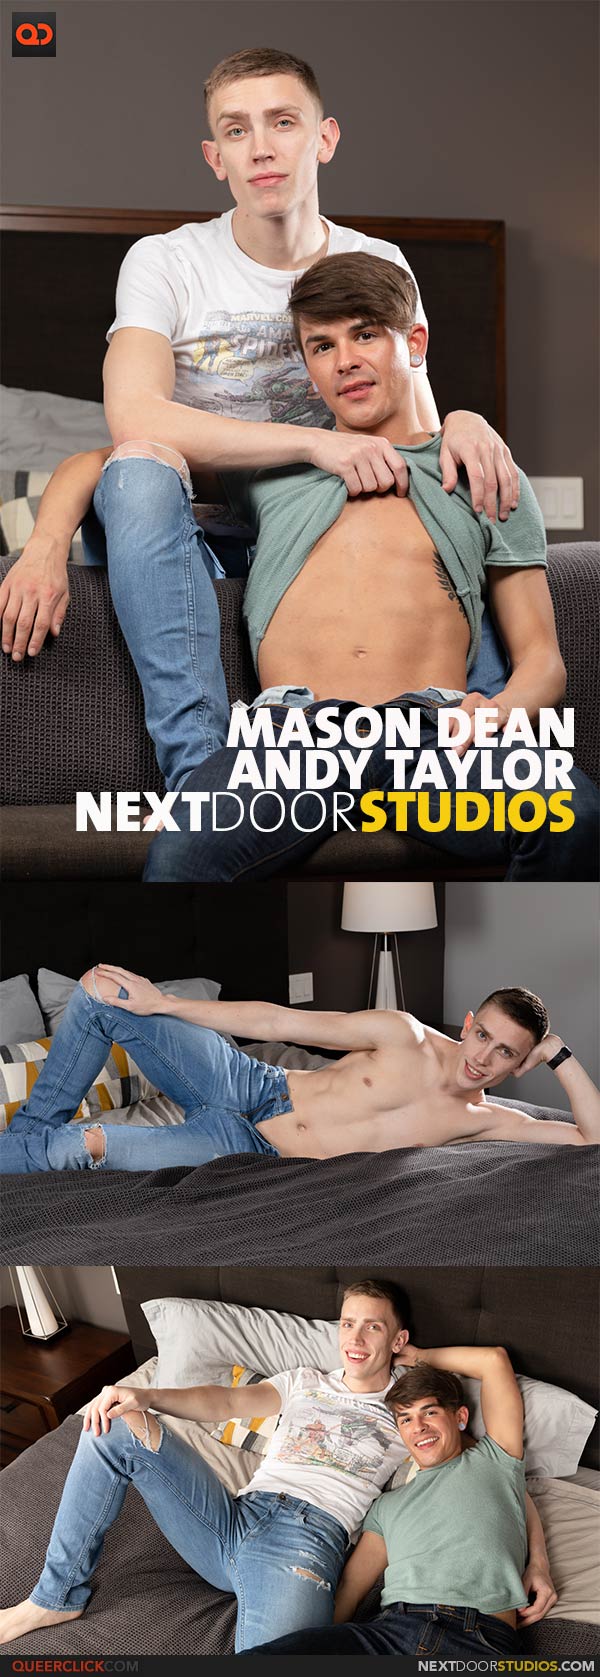 NextDoorStudios: Andy Taylor and Mason Dean